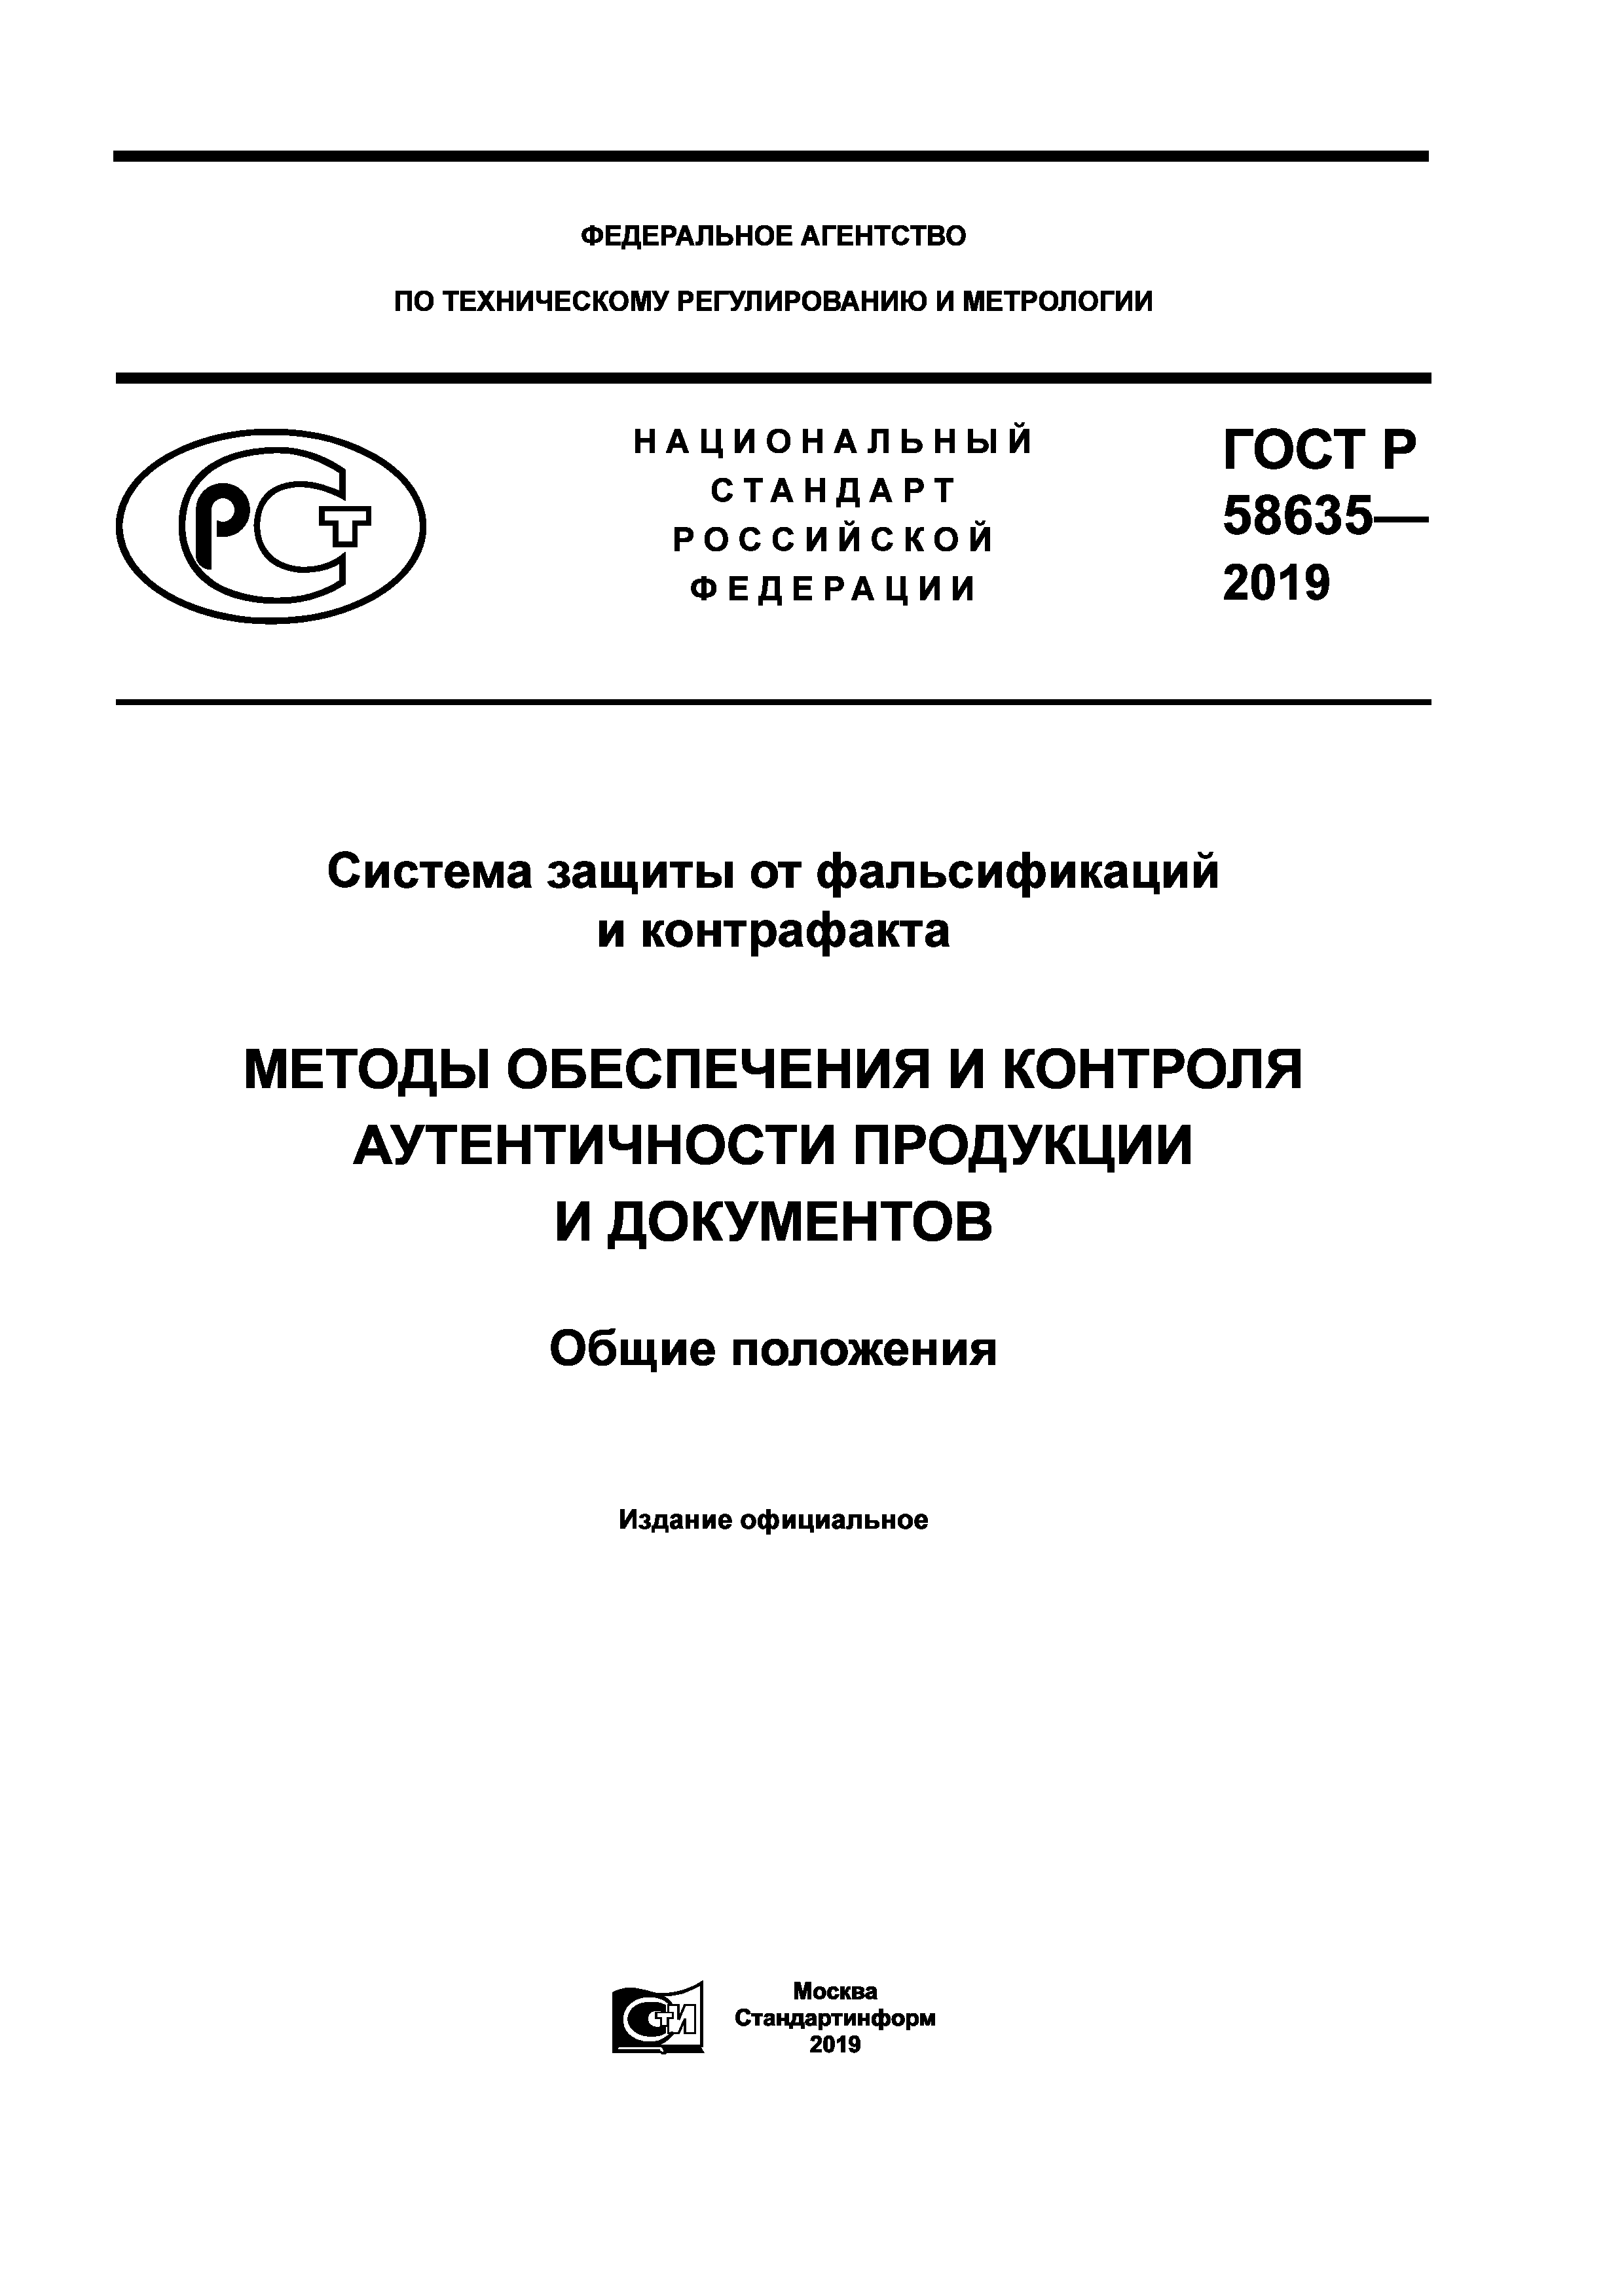 ГОСТ Р 58635-2019